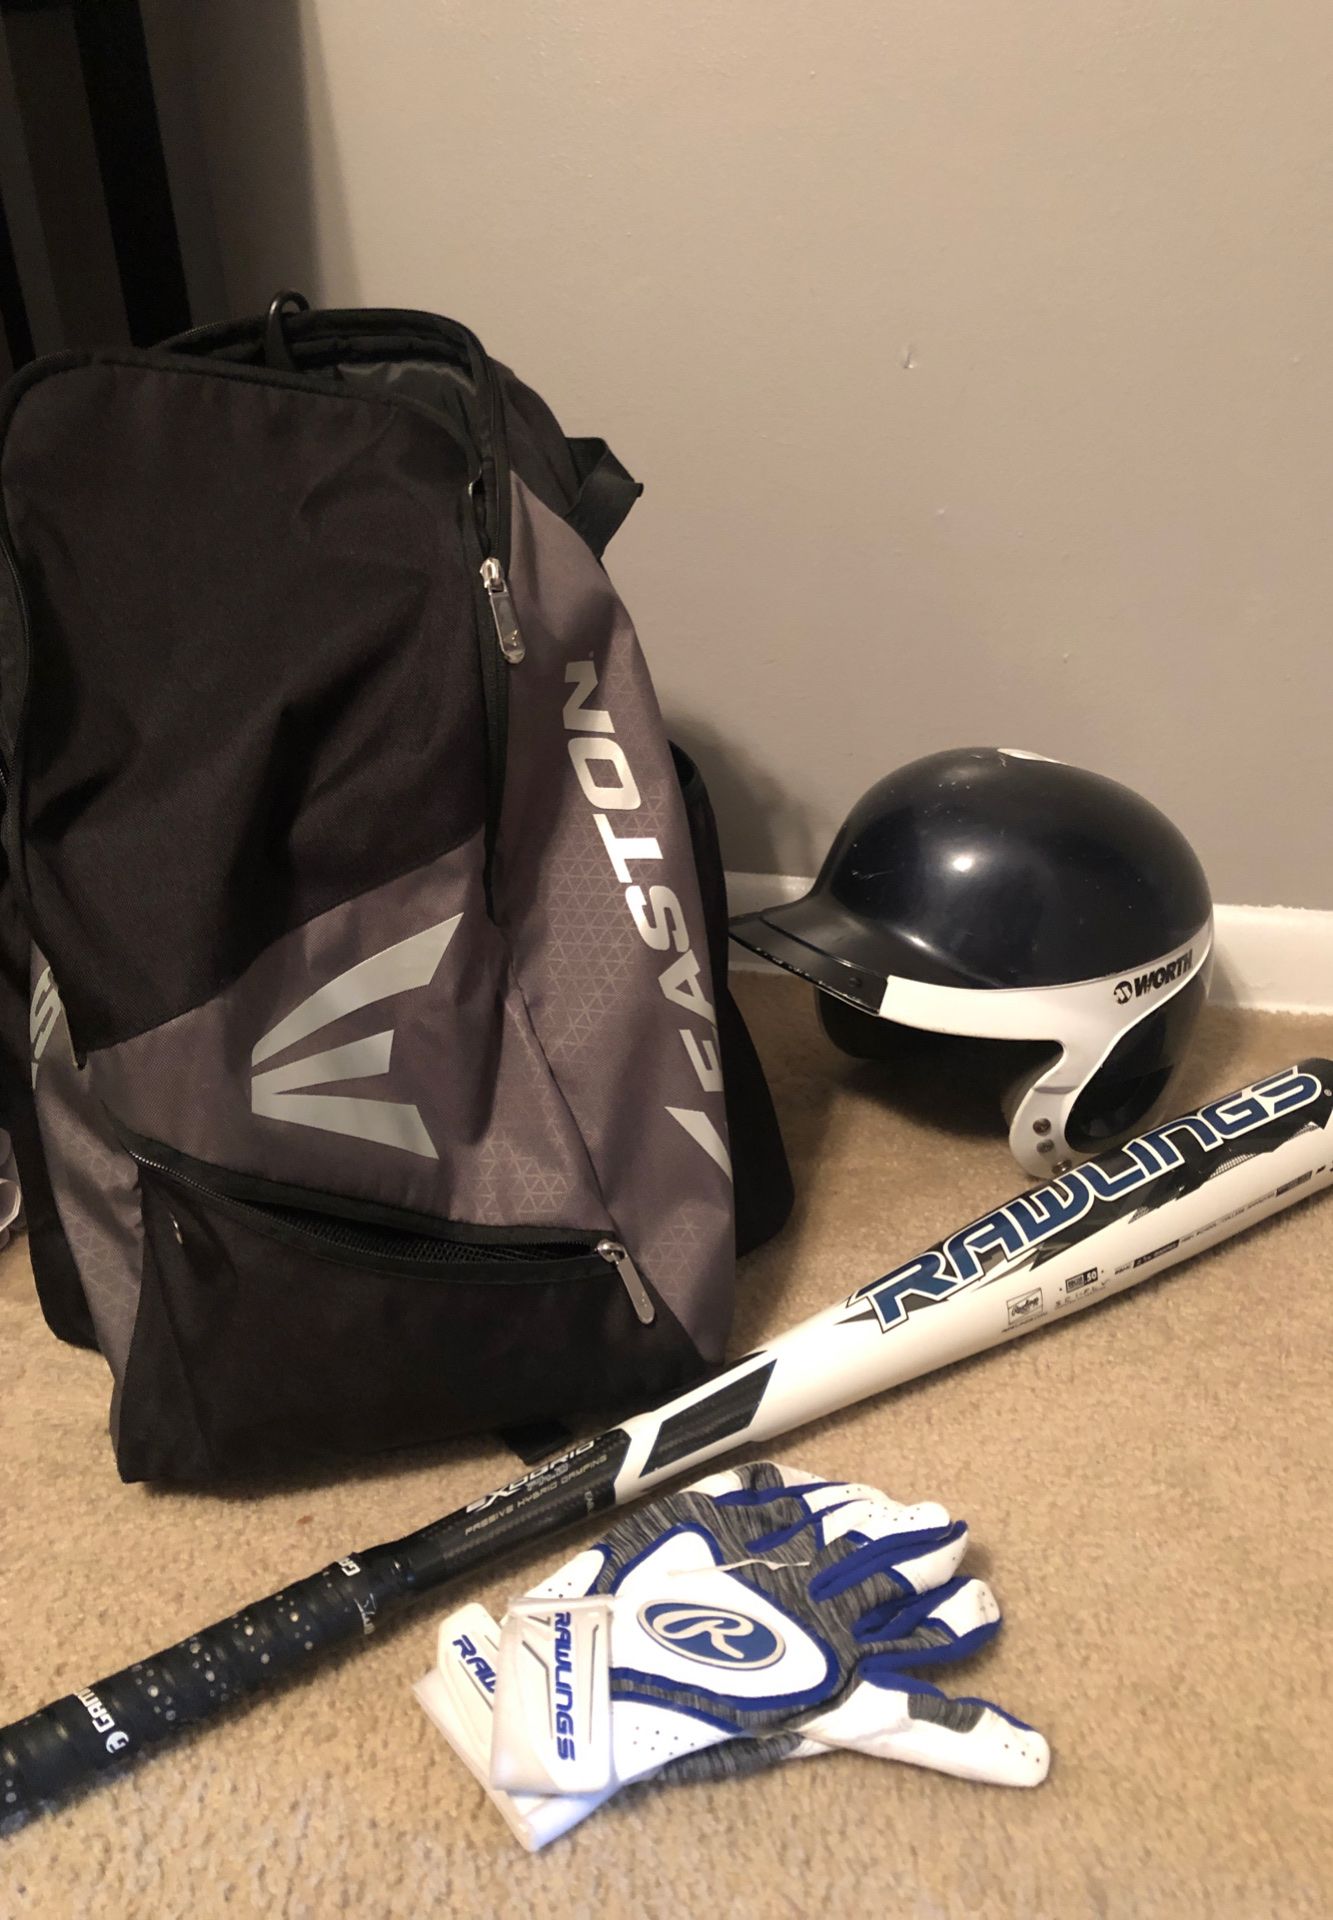 BBCOR baseball bat, helmet & gloves $70 (bag in pic has been sold)